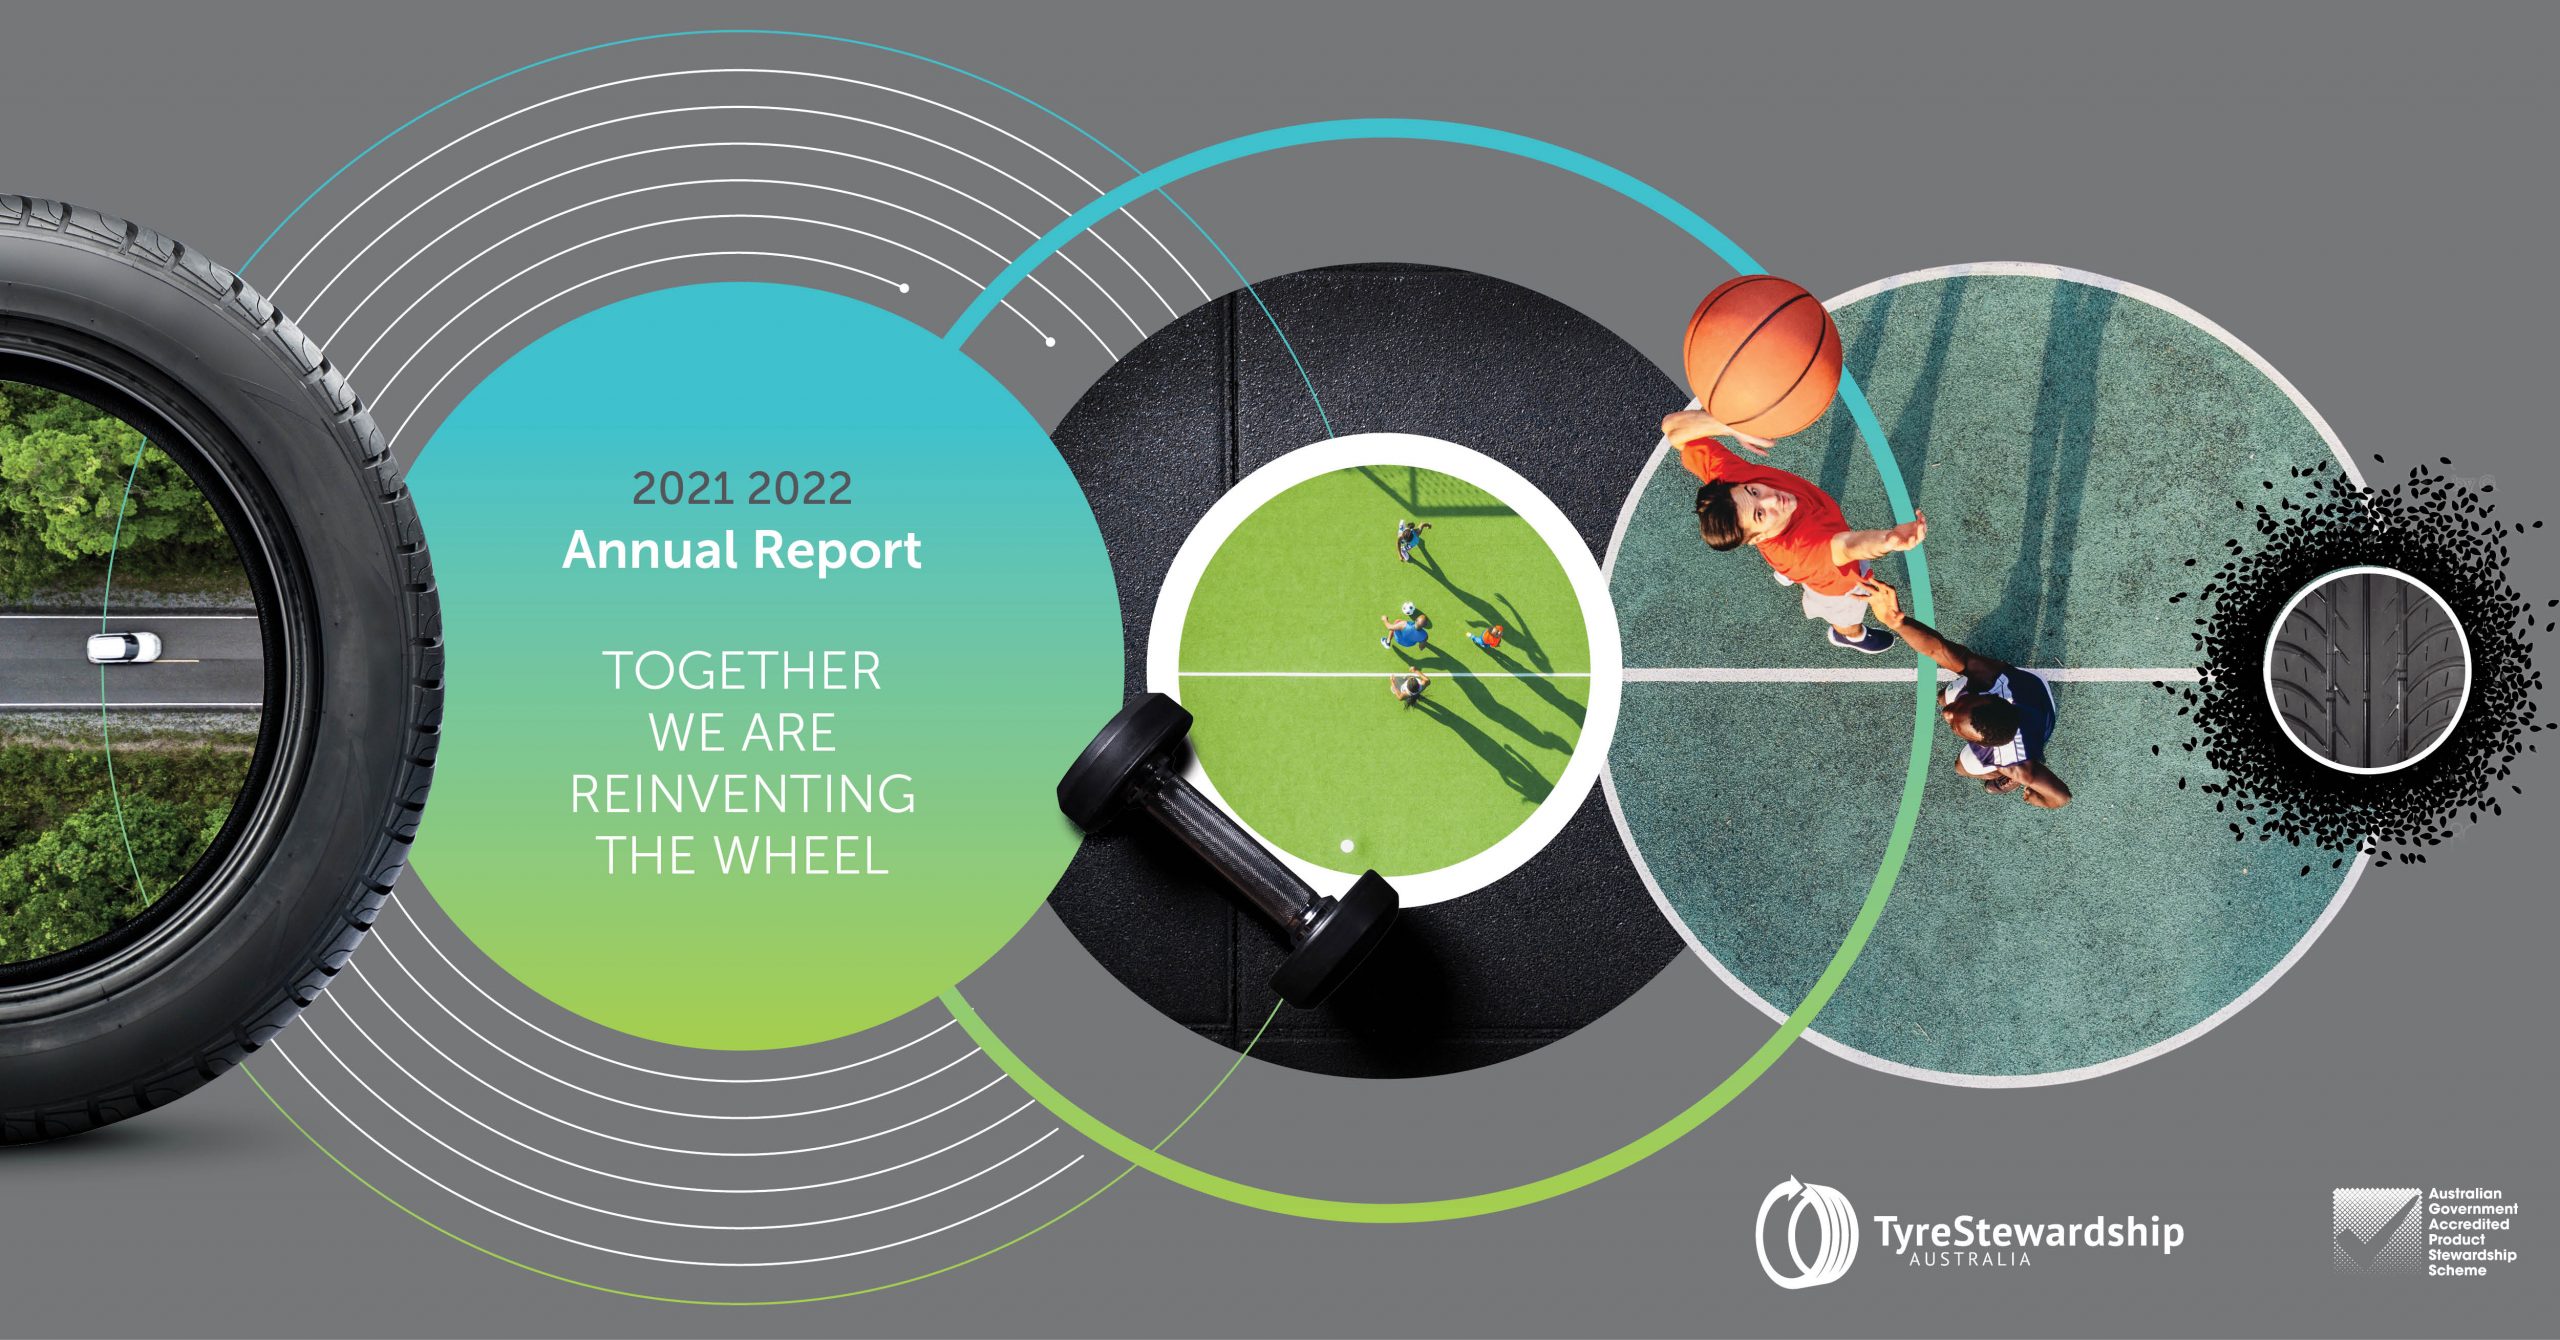 Tyre Stewardship Australia publishes 2021/22 Annual Report